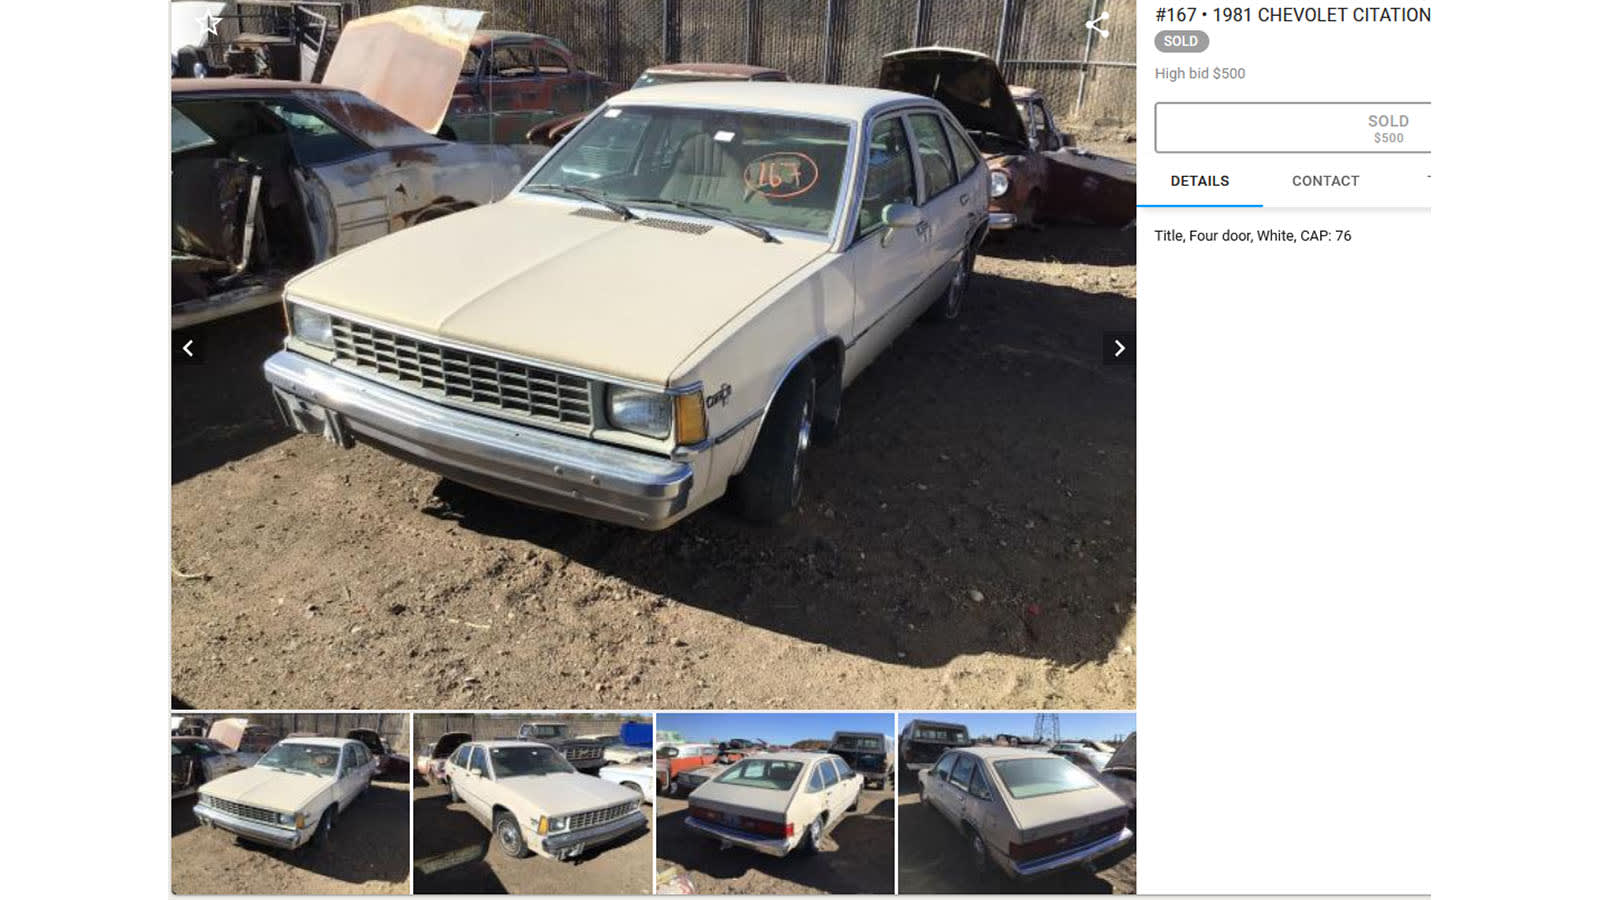 98 1981 Chevrolet Citation in Colorado Auction – TodayHeadline